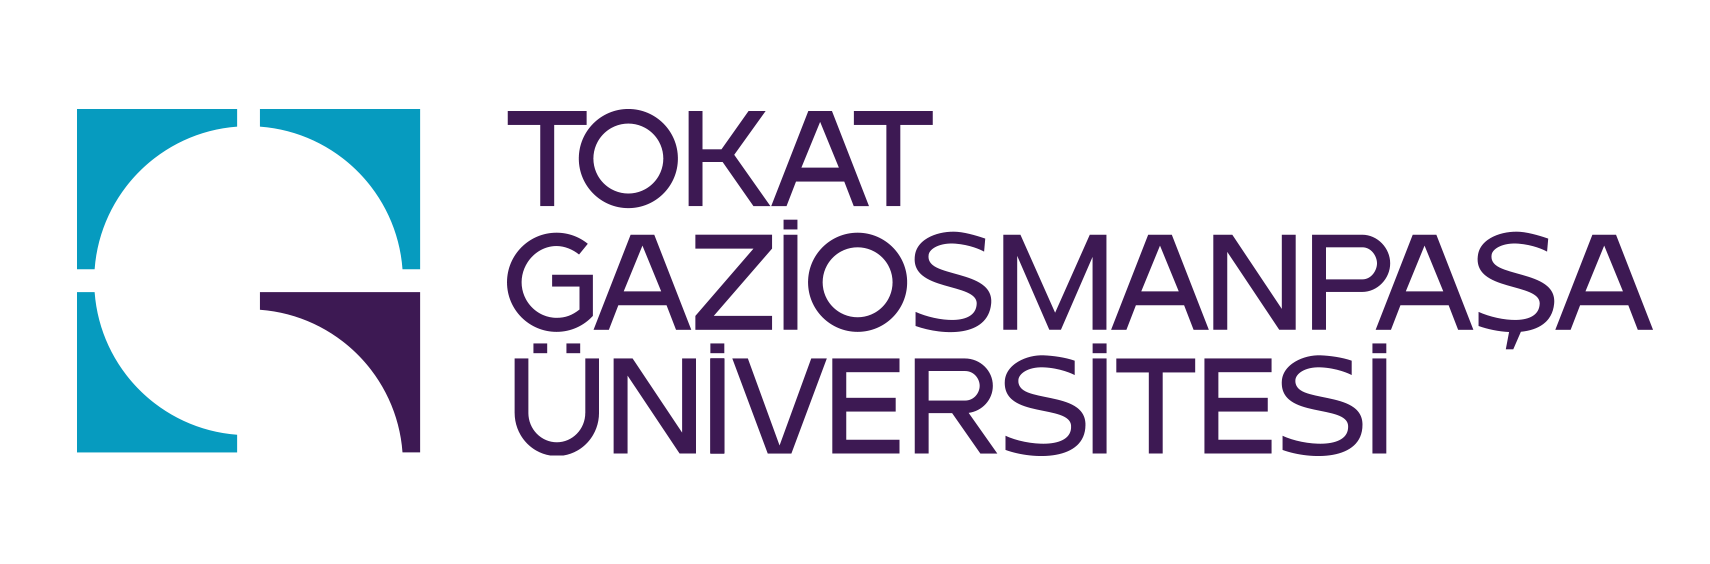 Tokat Gaziosmanpaşa University